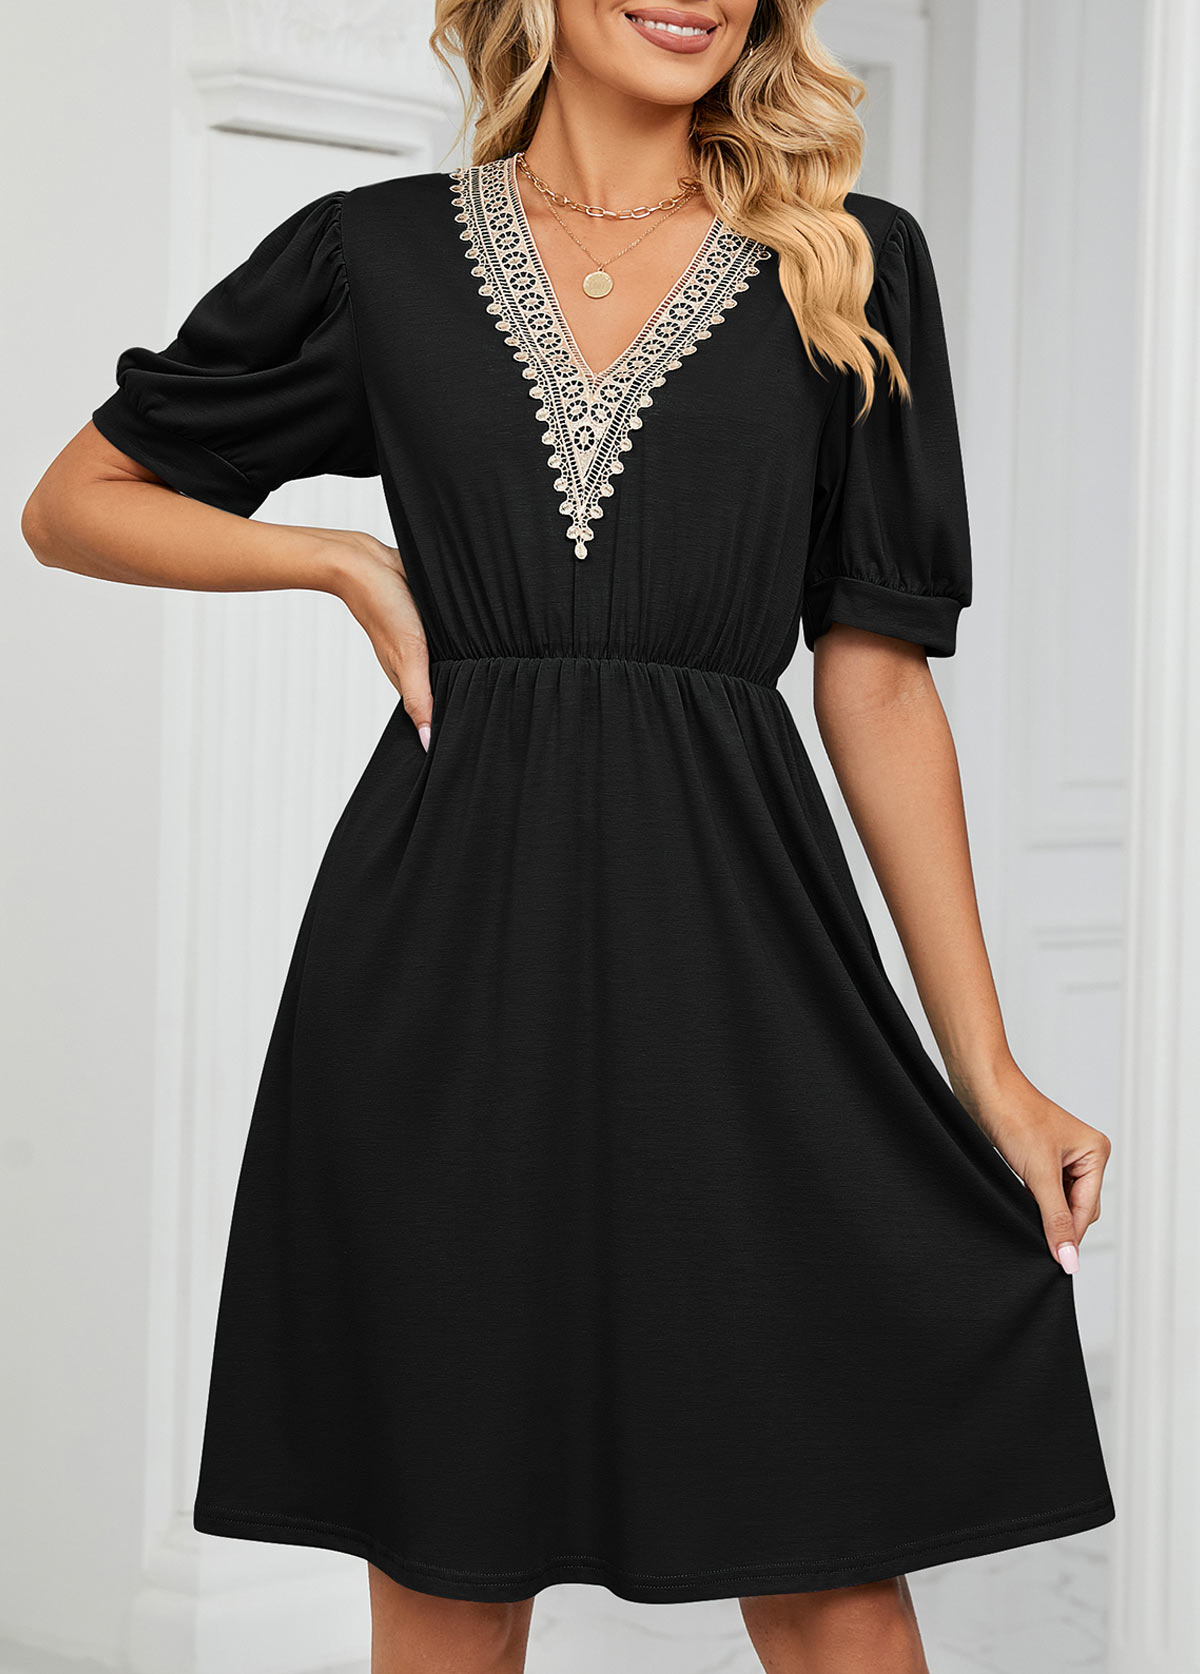 Lace Pocket Black V Neck Short Sleeve Dress